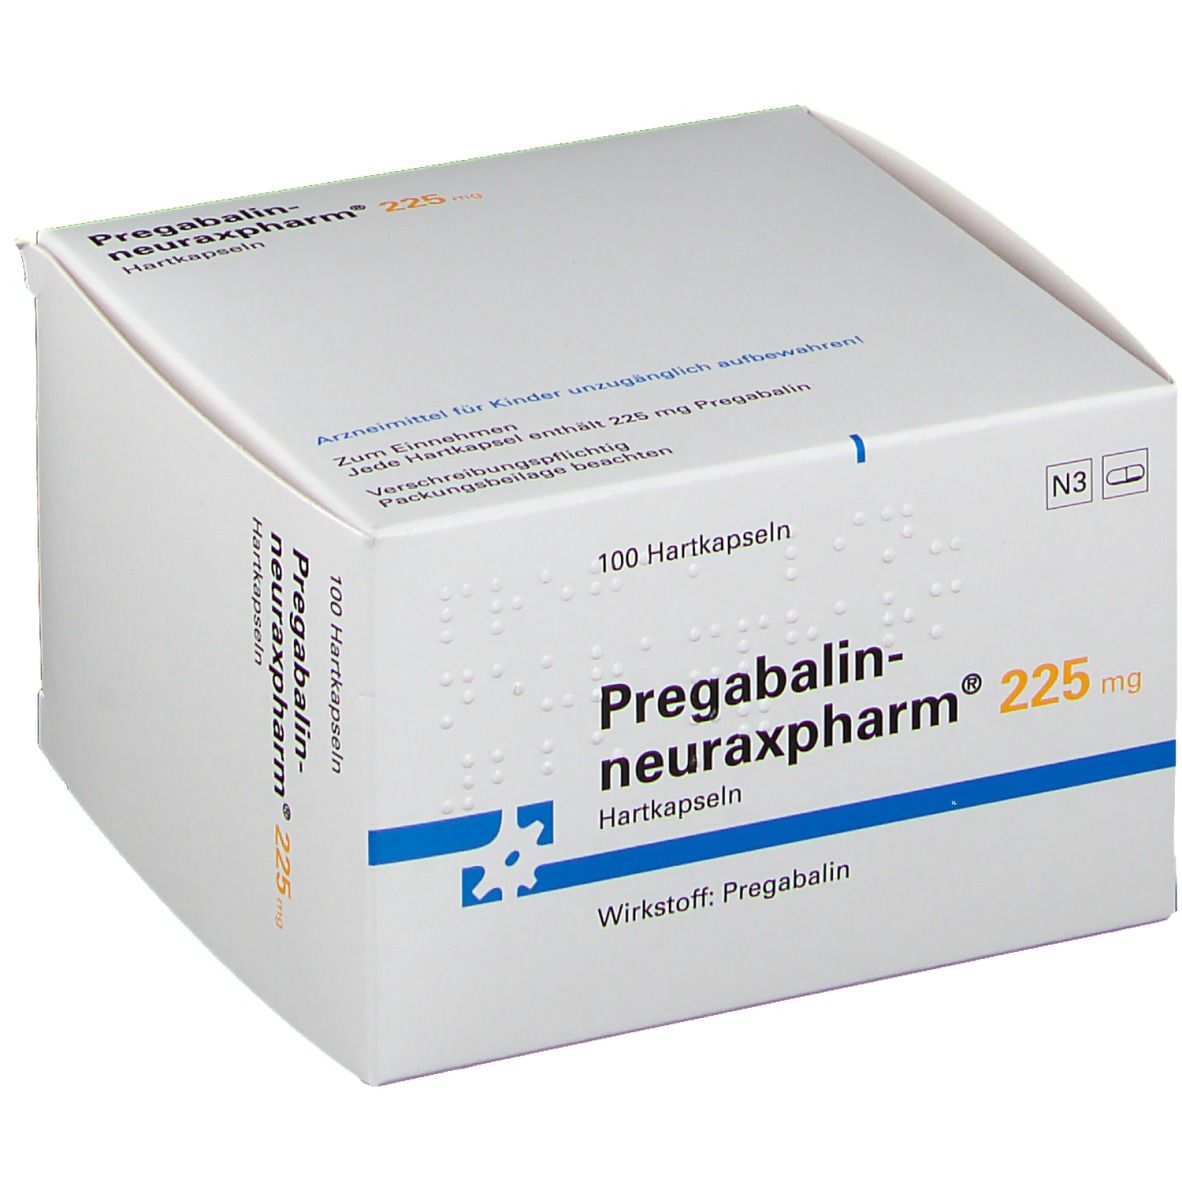 Pregabalin-neuraxpharm® 225 mg